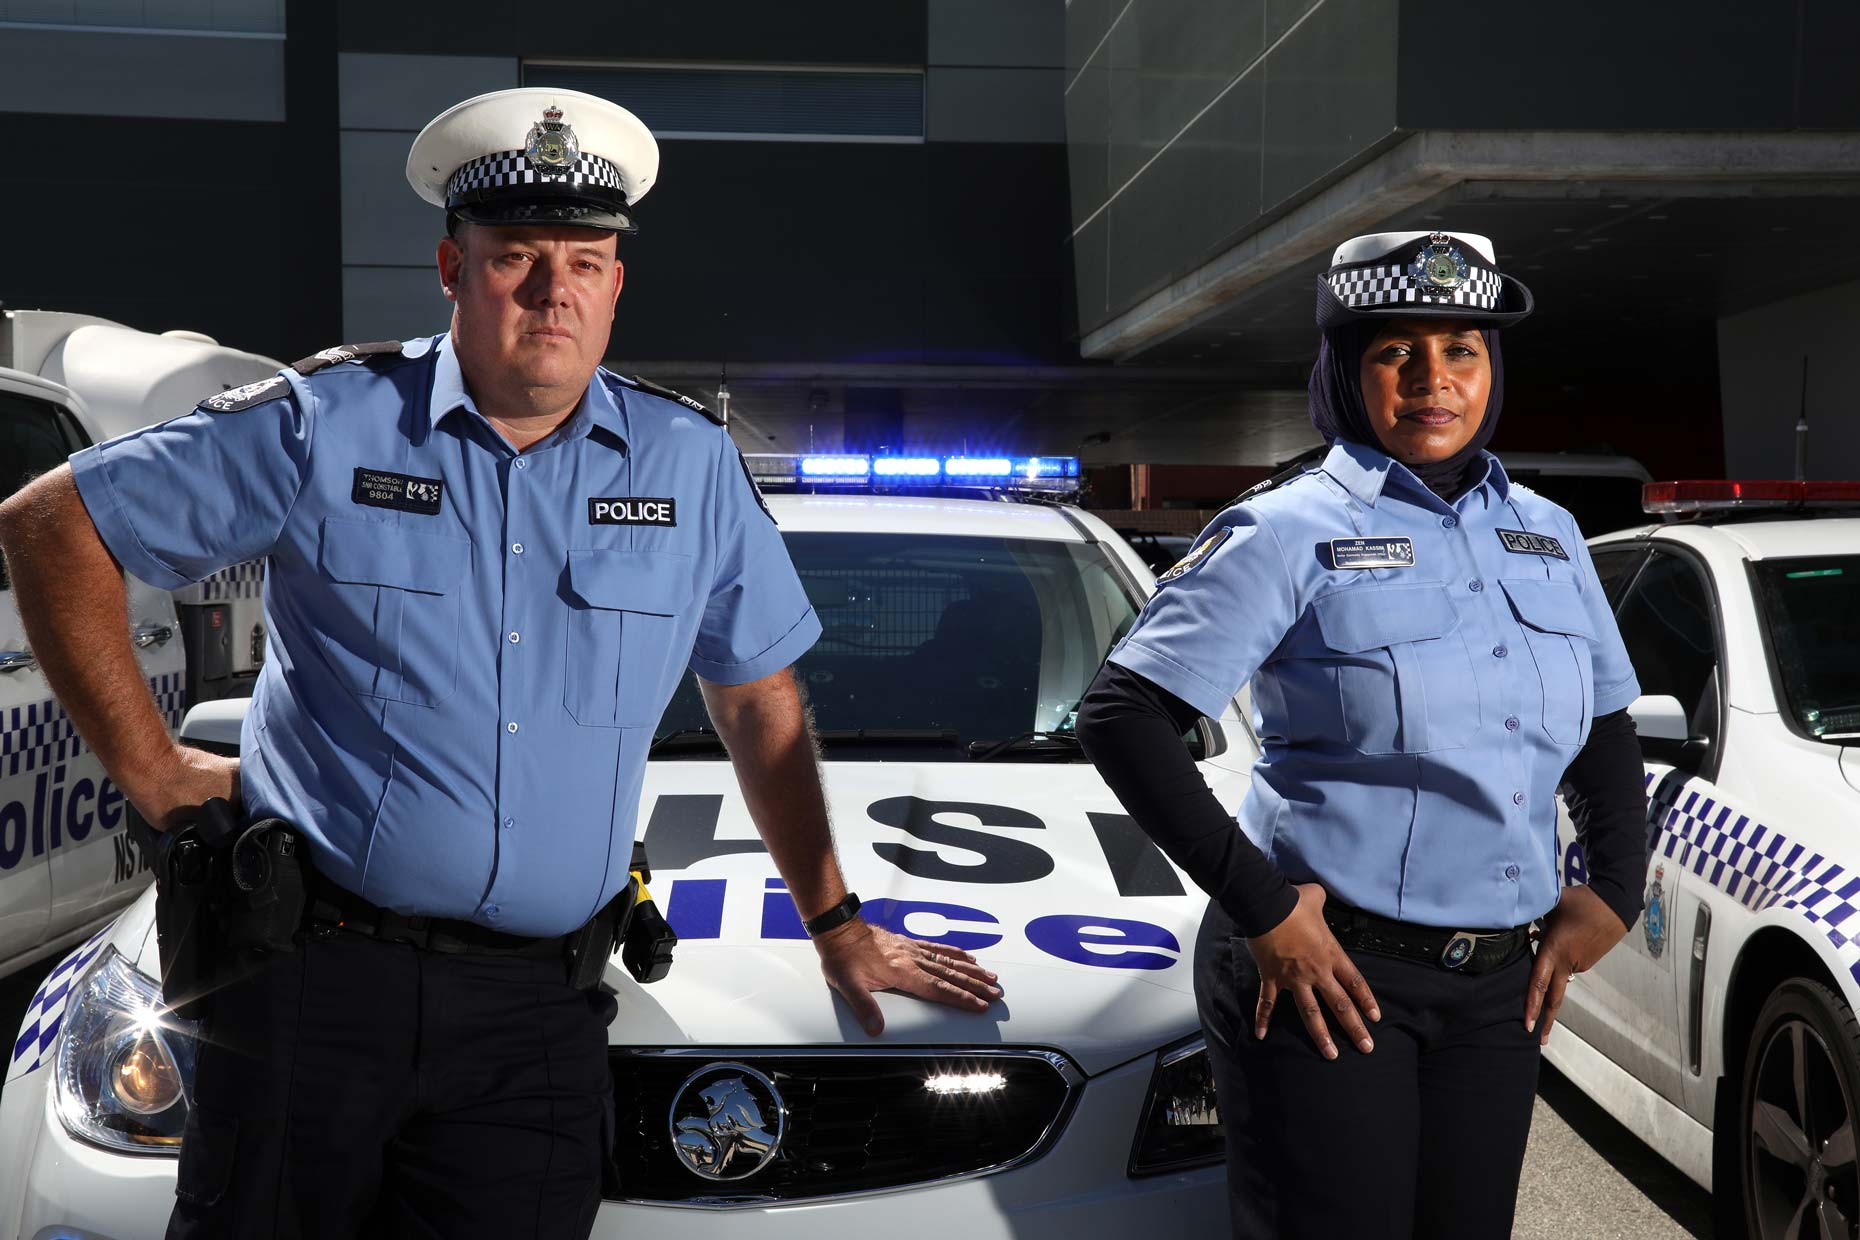 Untold Australia: Multicultural Police